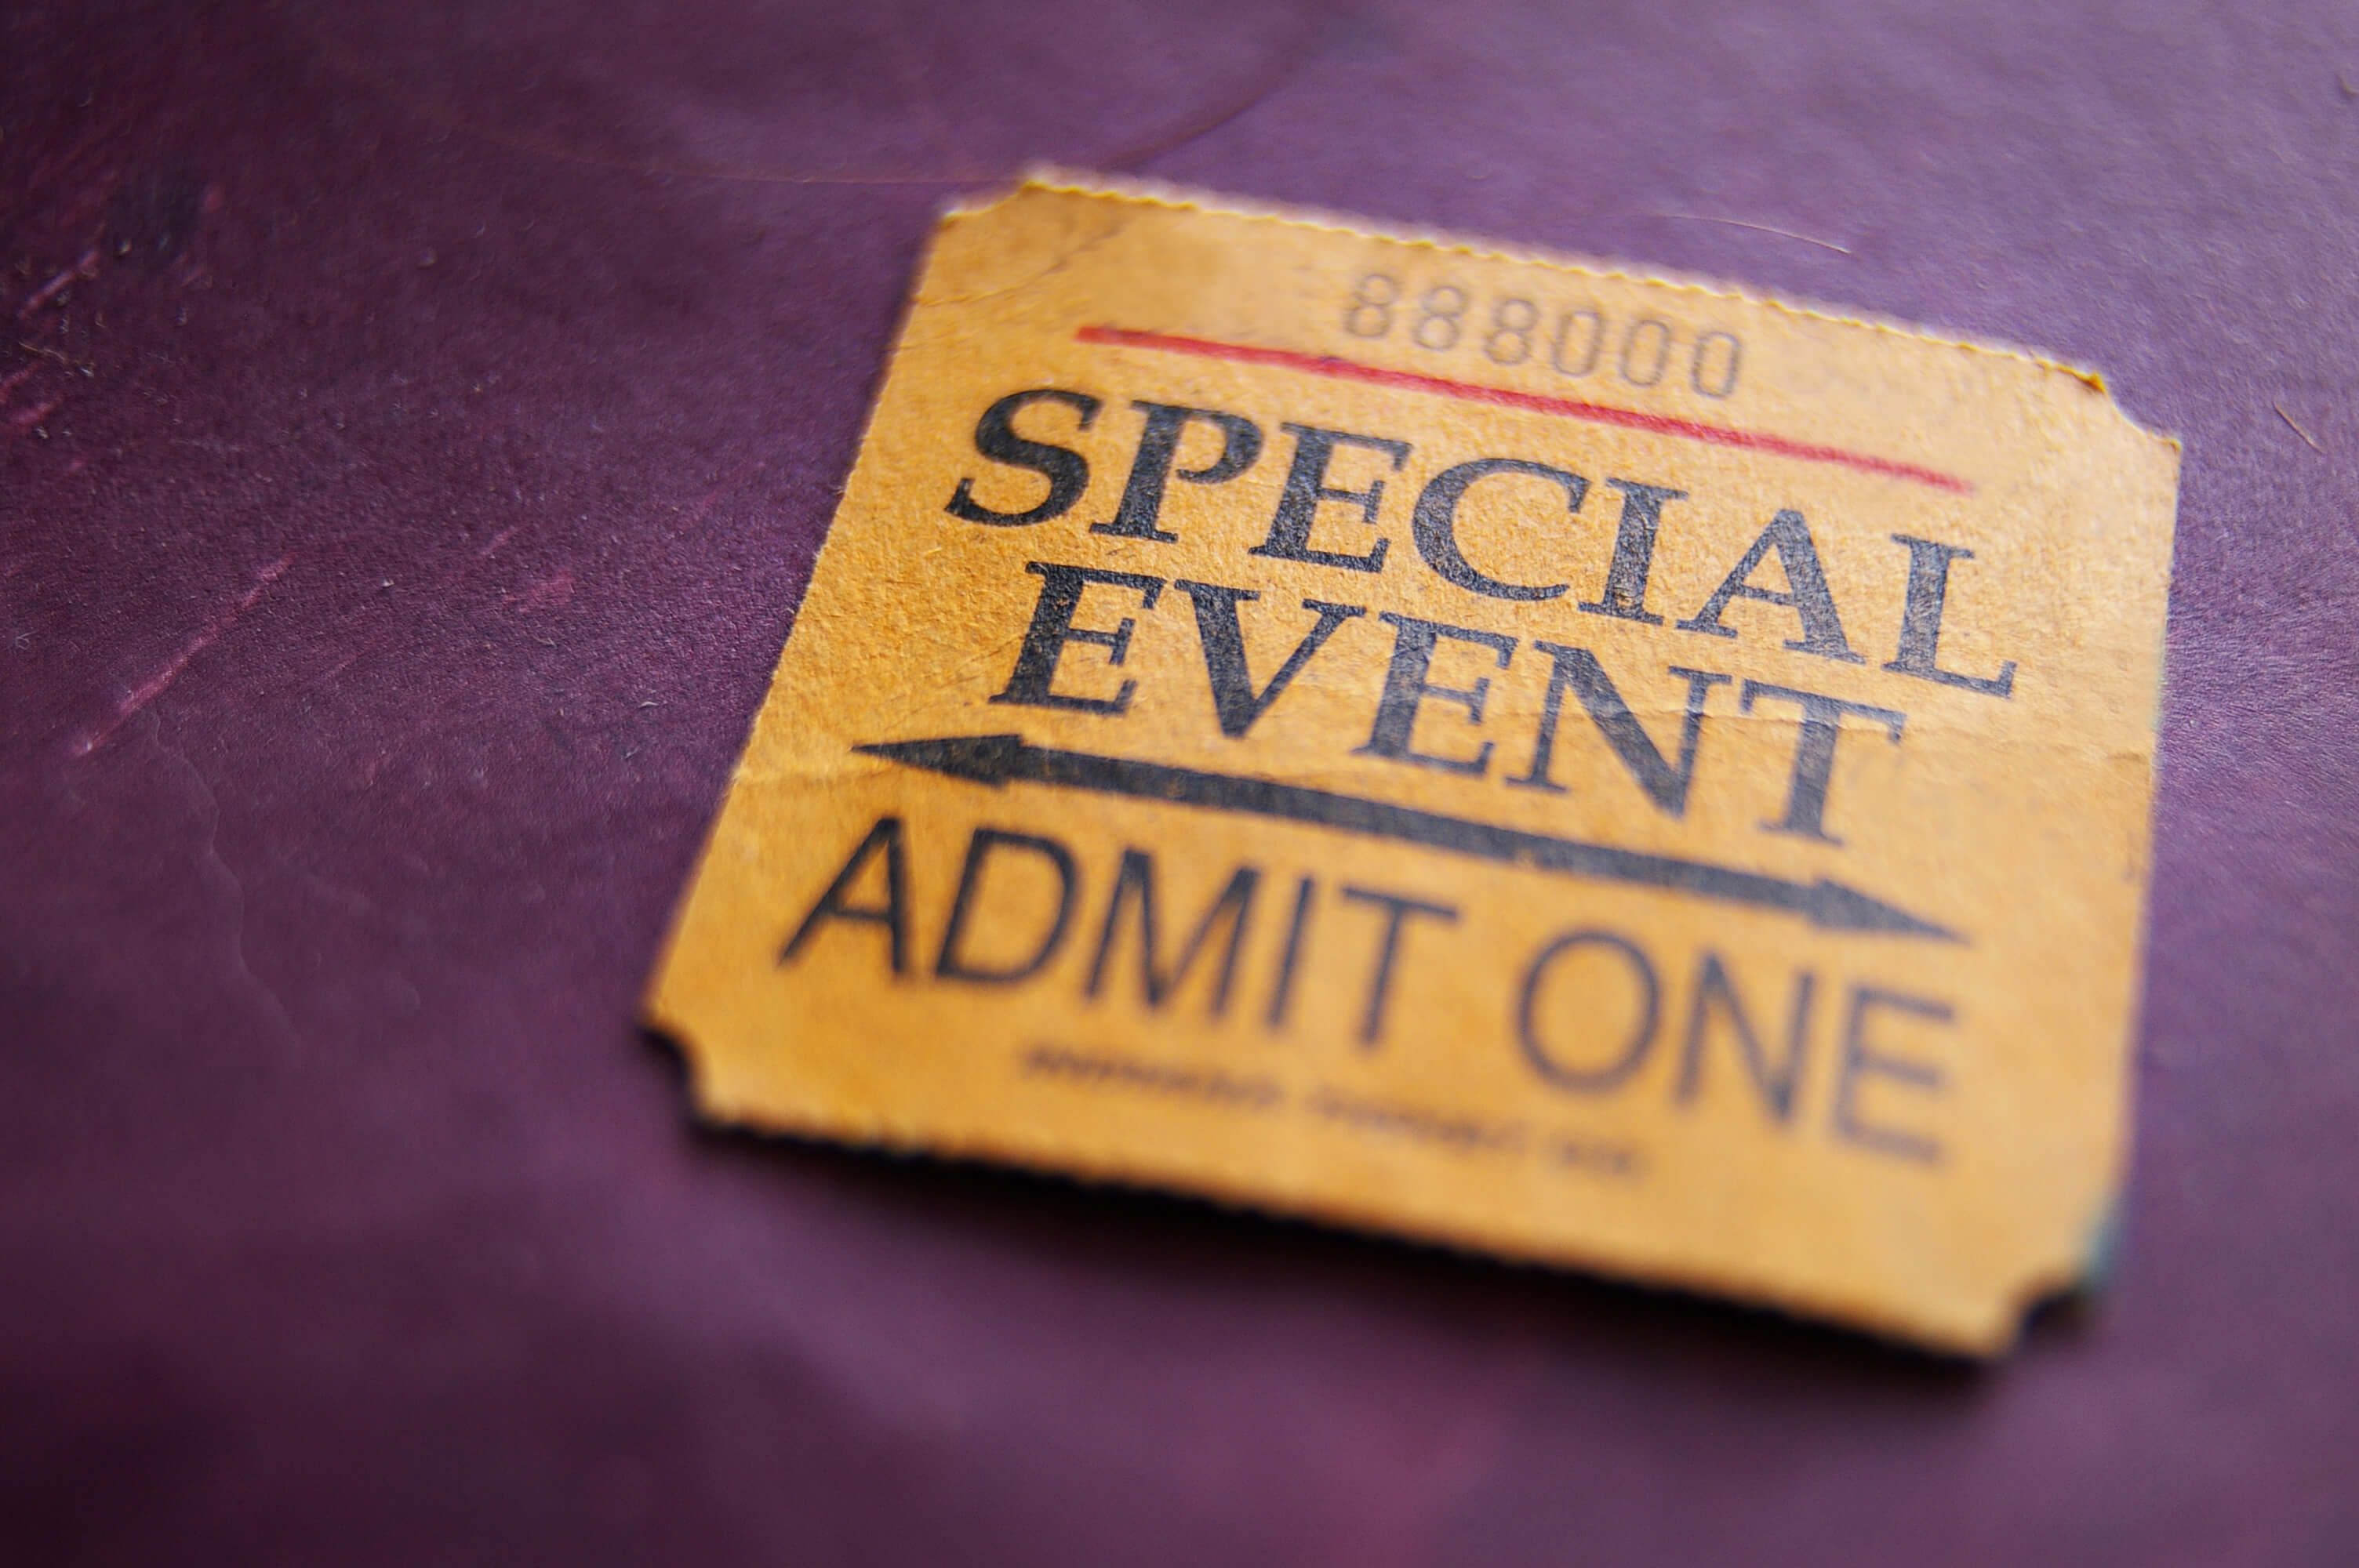 Event ticket